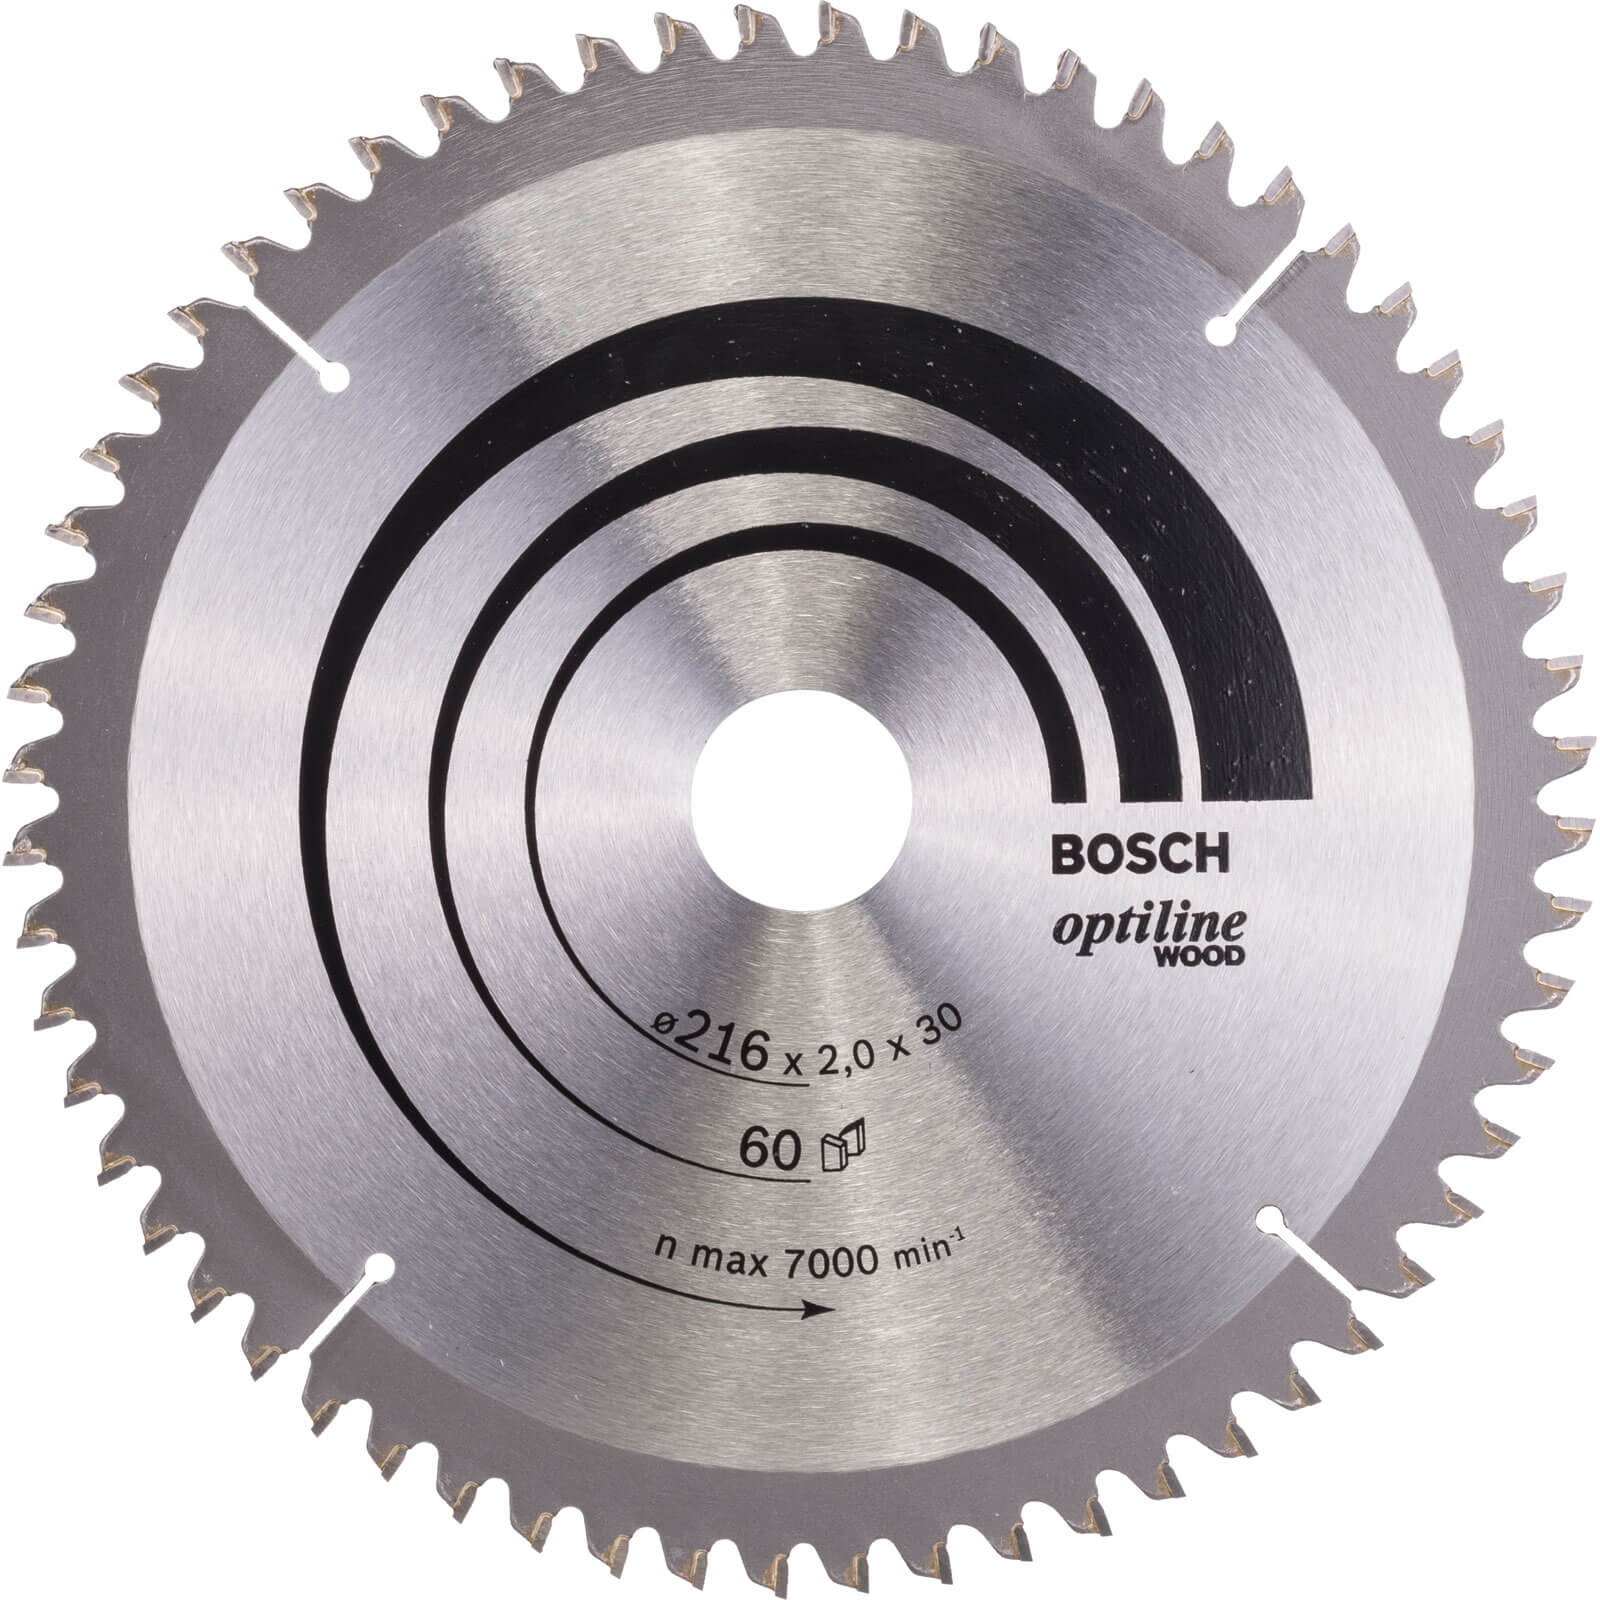 Photo of Bosch Optiline Wood Cutting Mitre Saw Blade 216mm 60t 30mm